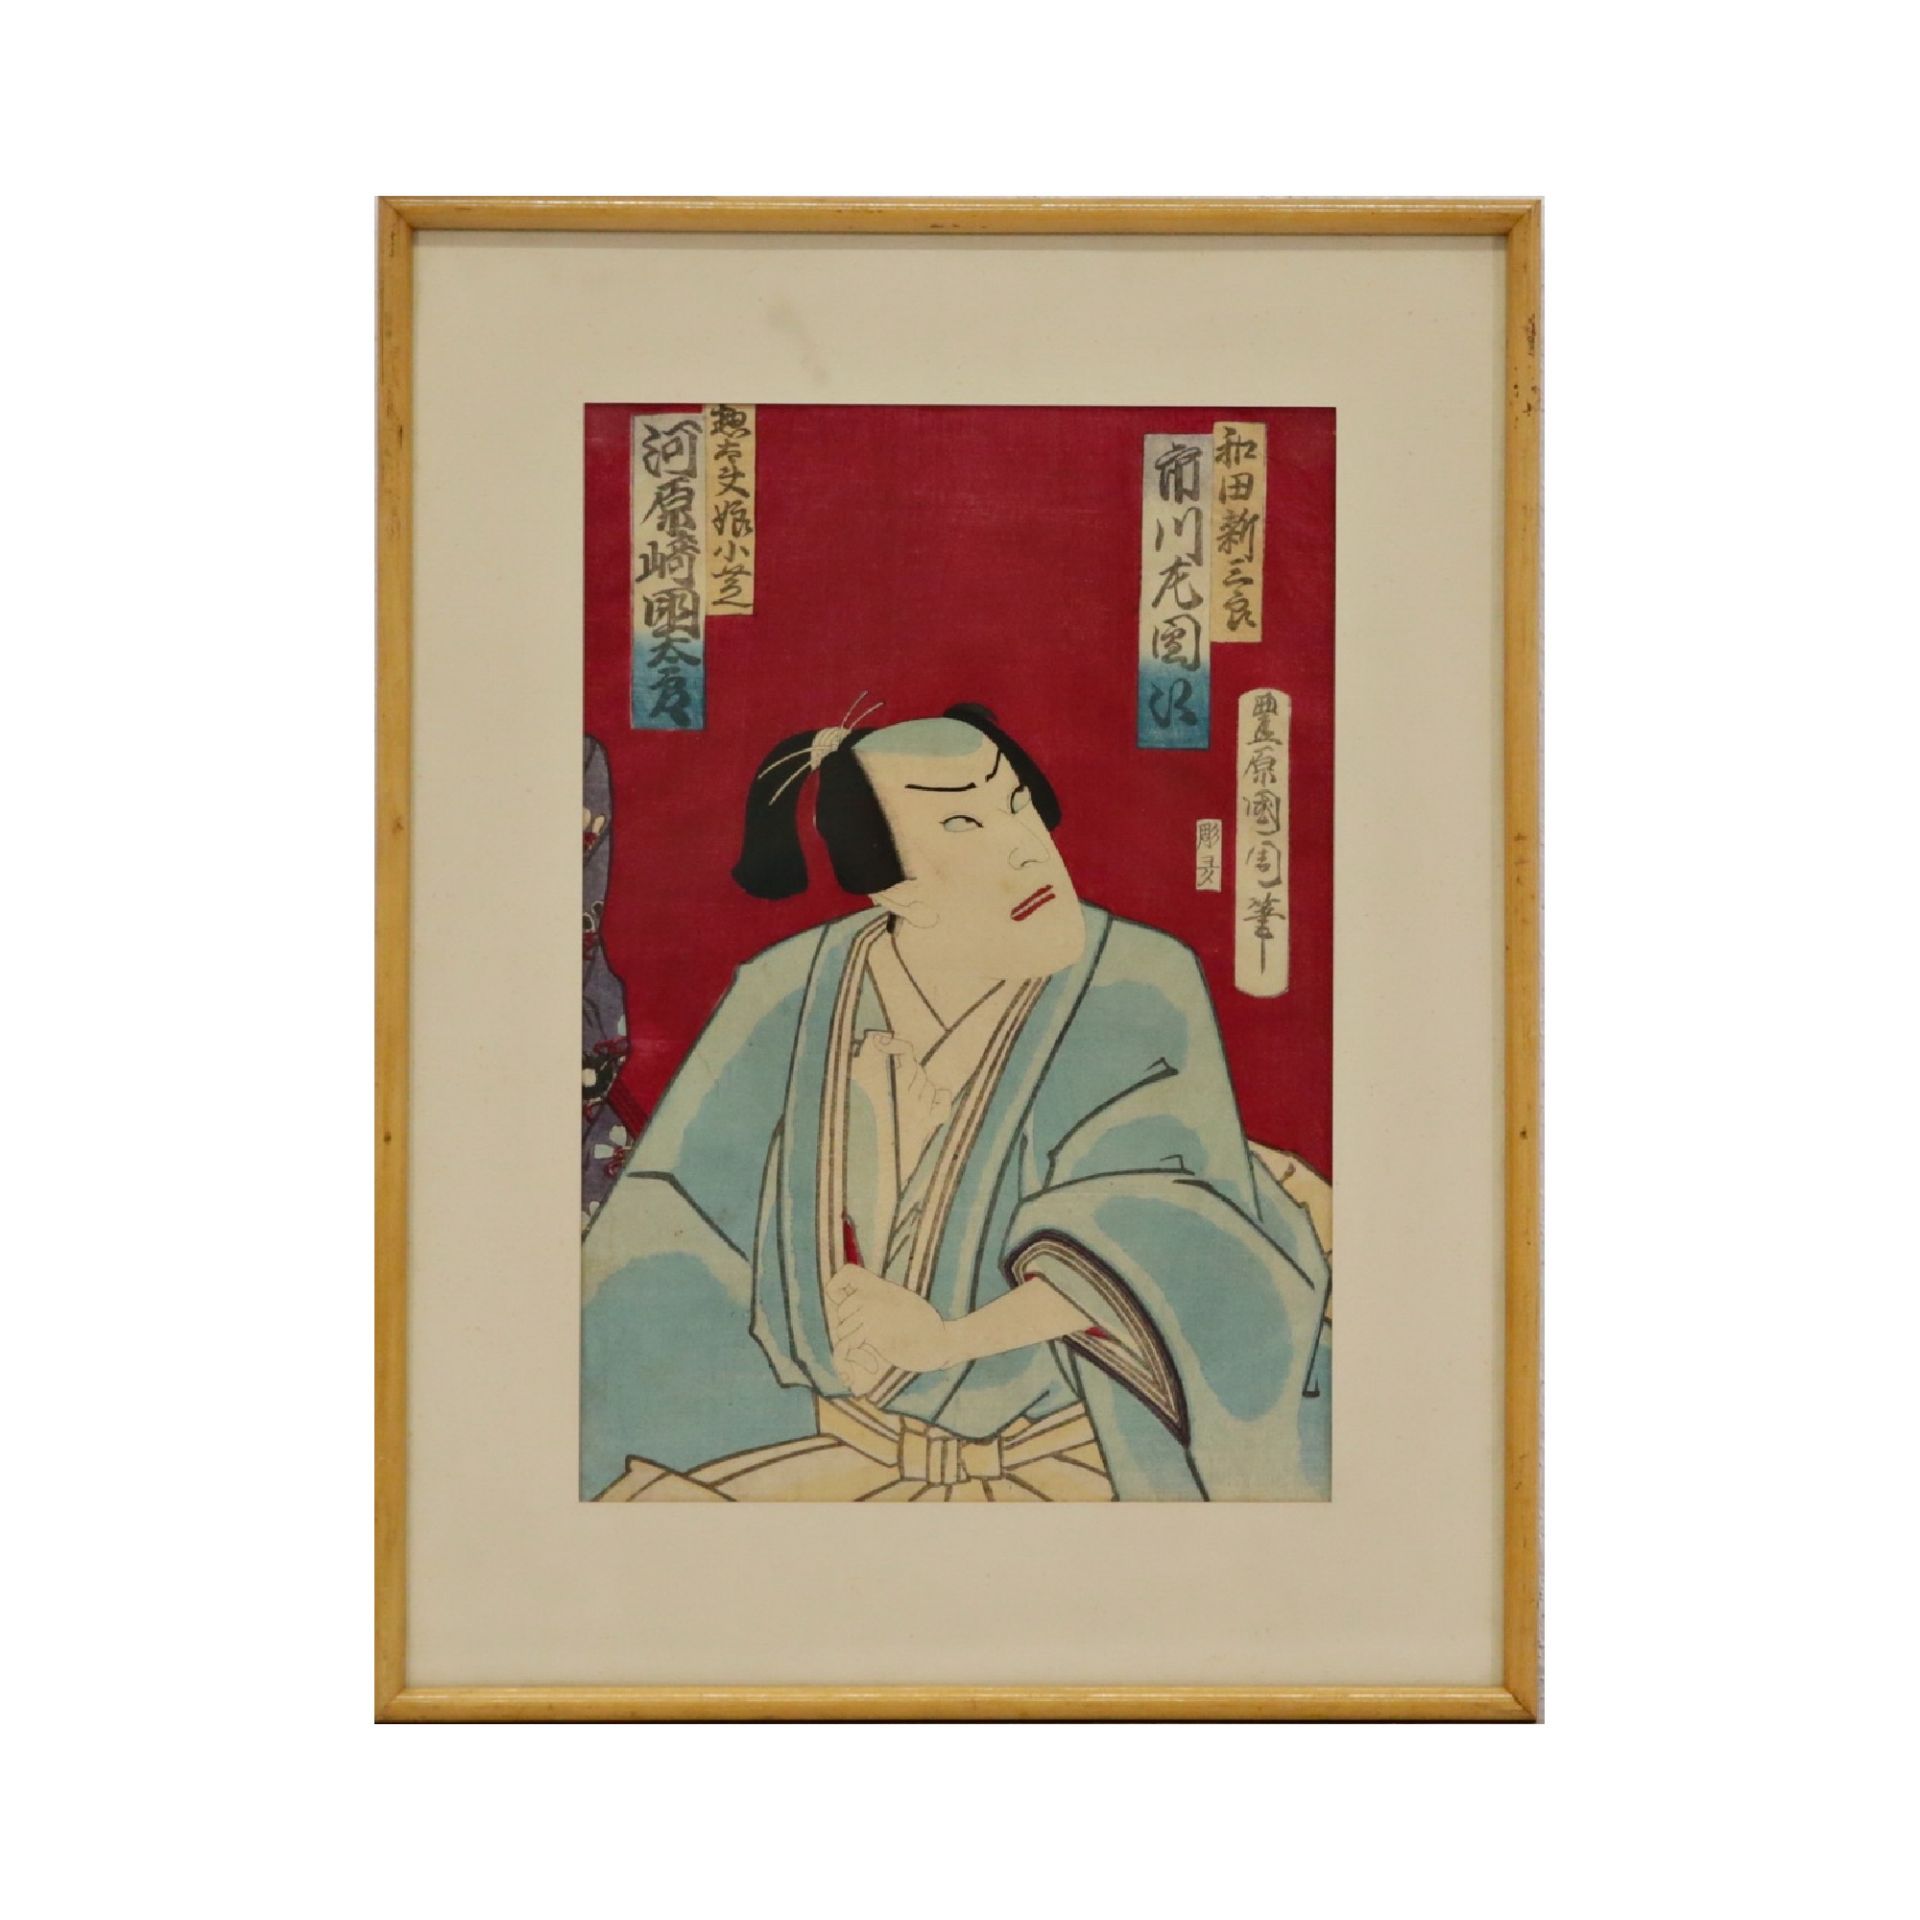 Antique Original Japanese Print, "Samurai" 19th _. Japanese art, Collectible art for home decor.